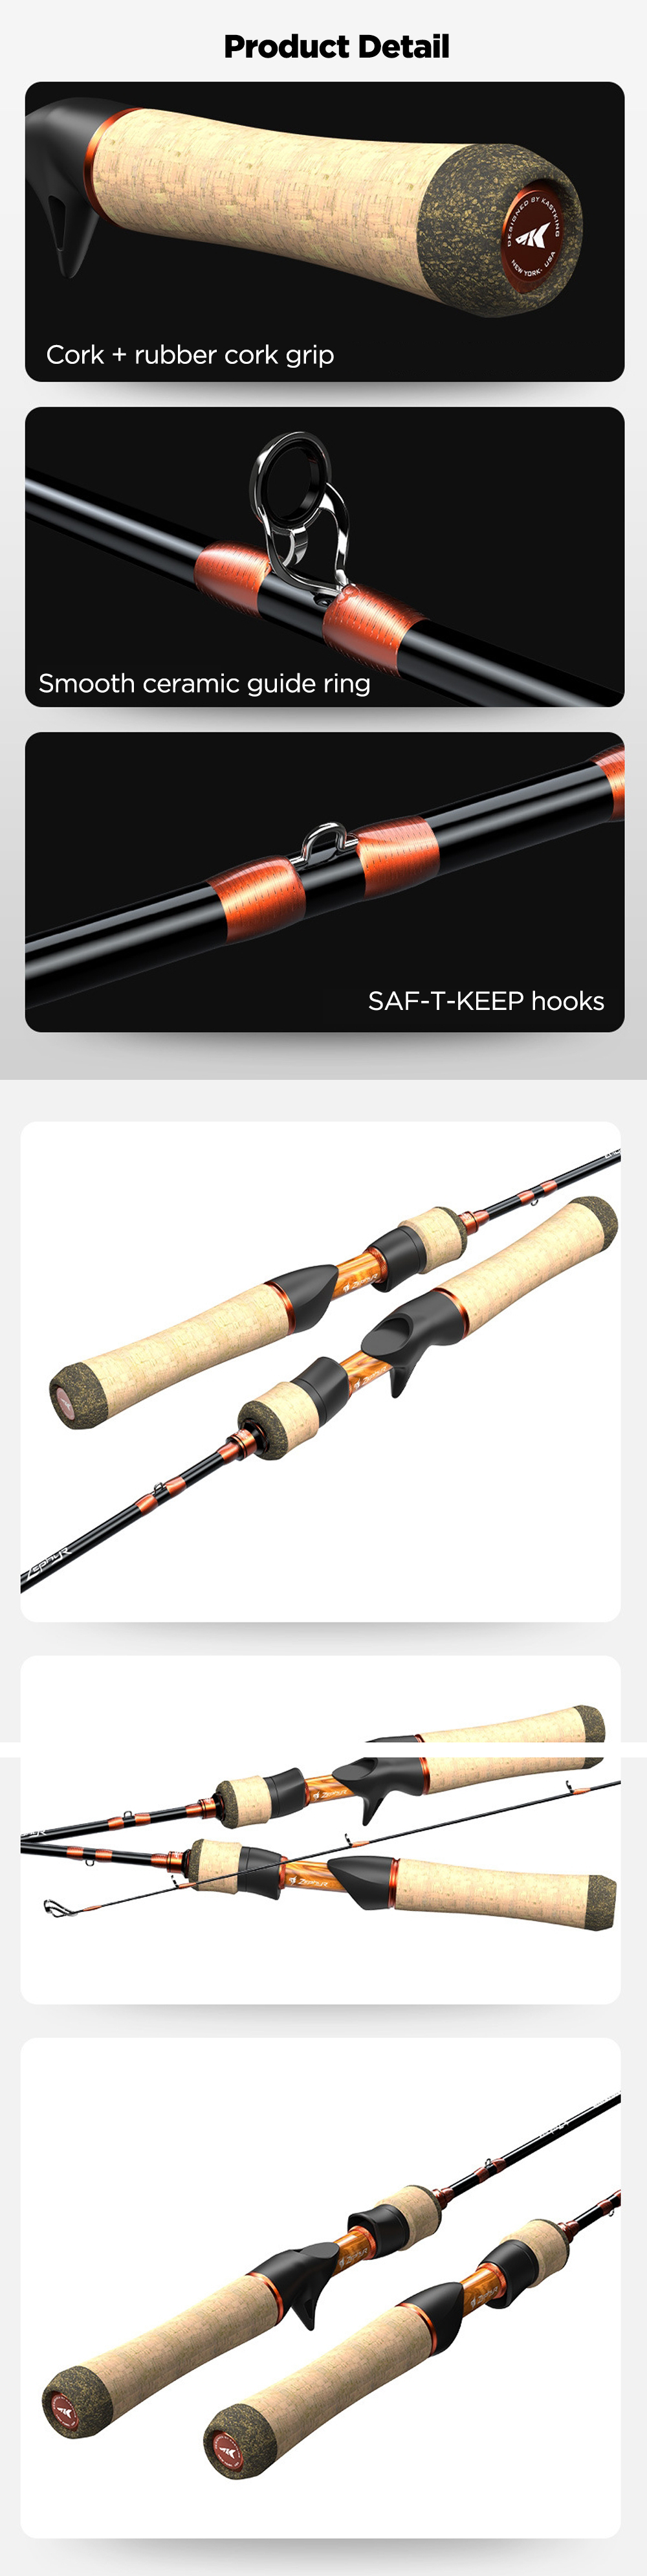 KastKing-15316818m-Fishing-Rods-Spinning-Casting-Carbon-Fiber-Retractable-Fishing-Pole-Fishing-Tackl-1864806-3